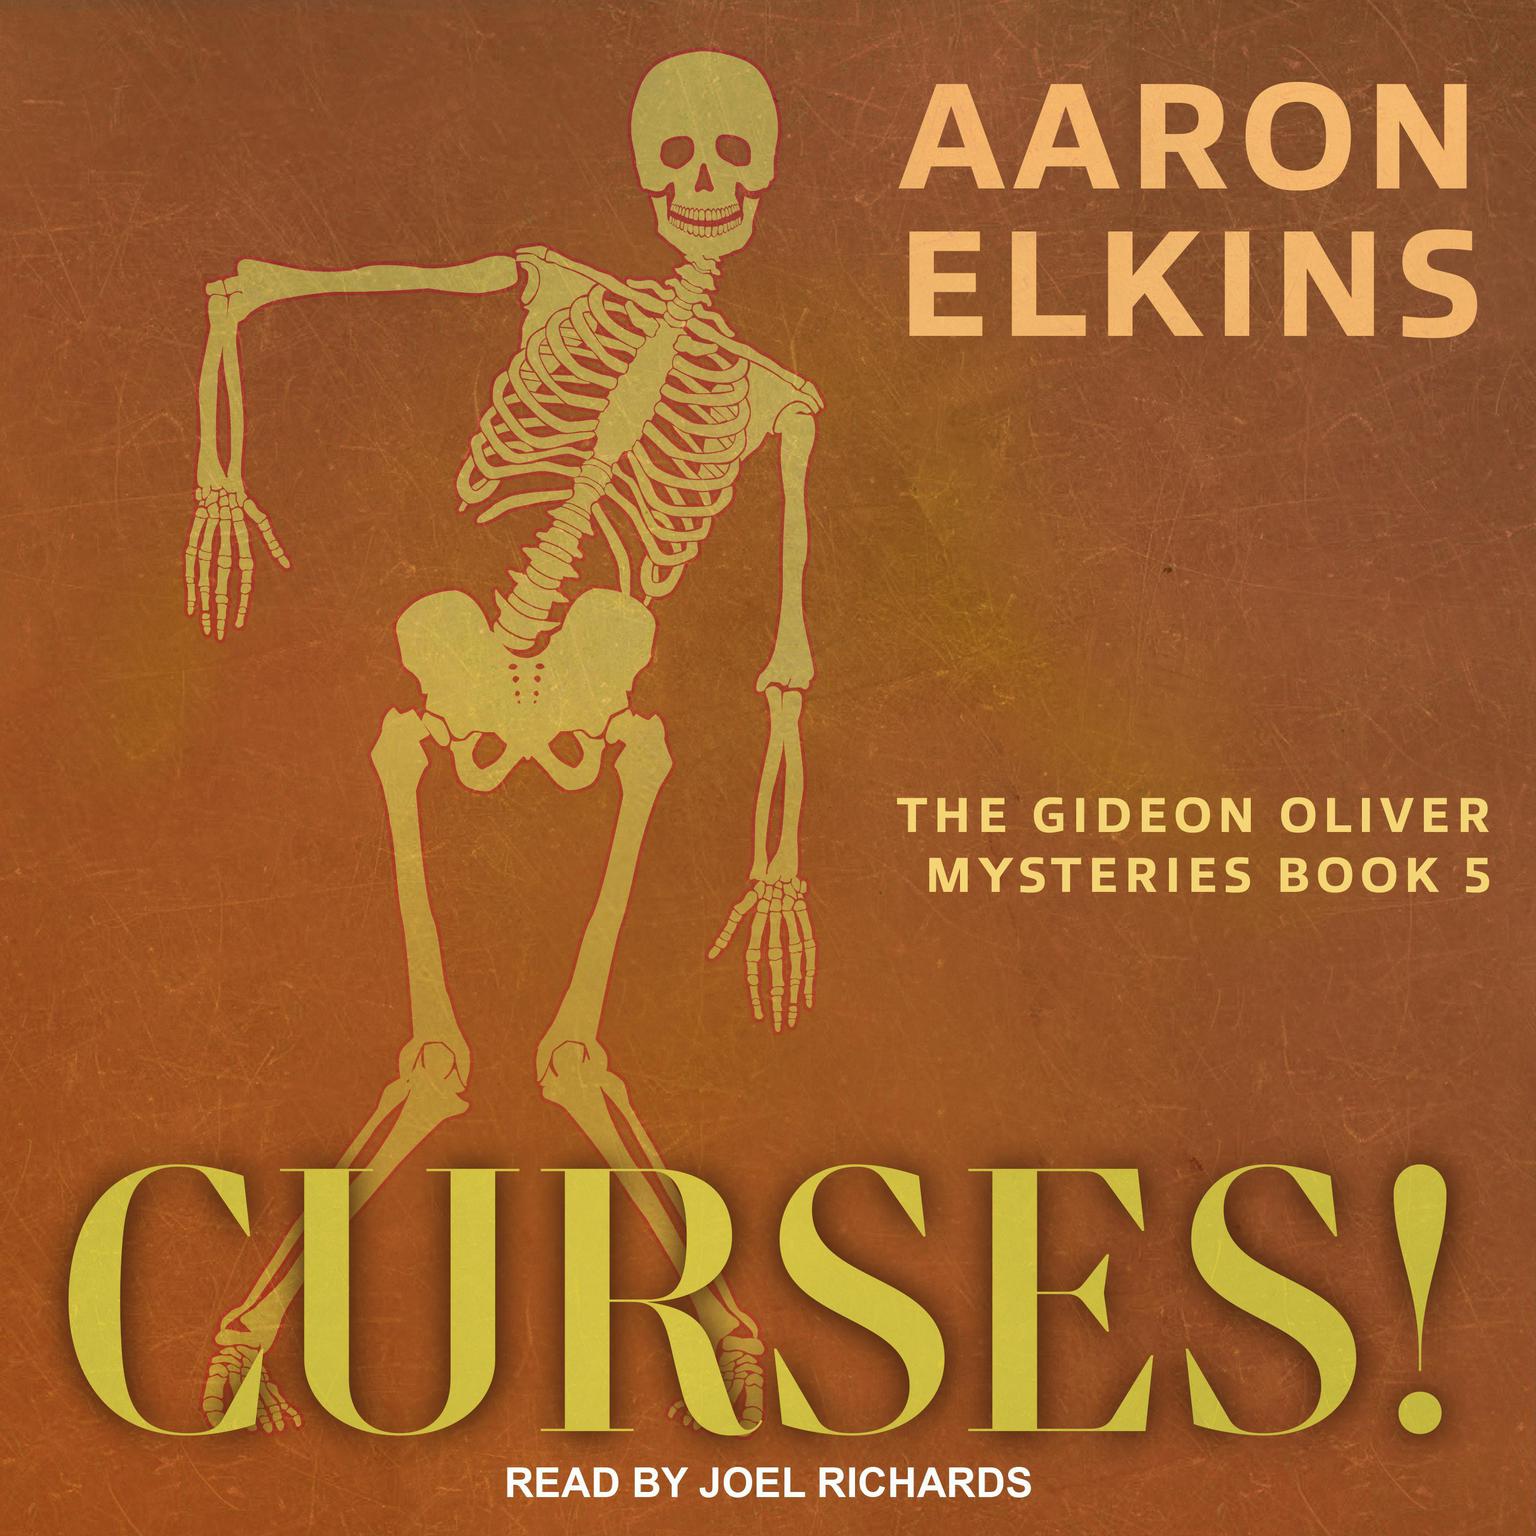 Curses! Audiobook, by Aaron Elkins